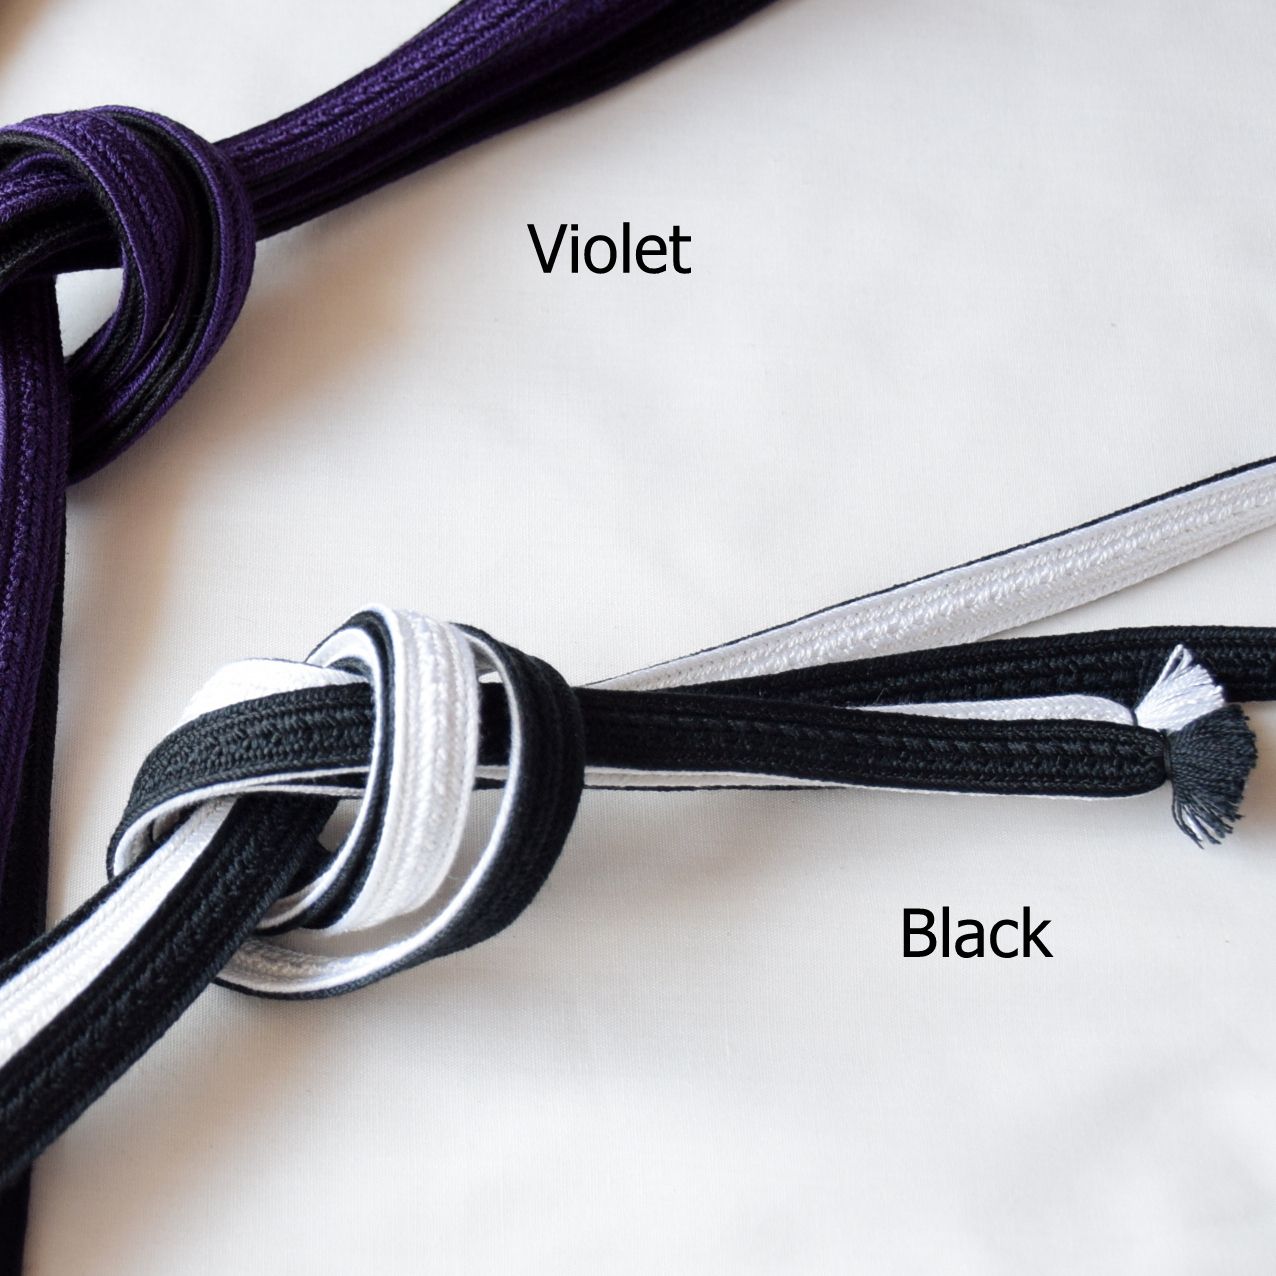 Sageo Black/red artifice Silk cord for iaito iaido shinken sword saya fitting 